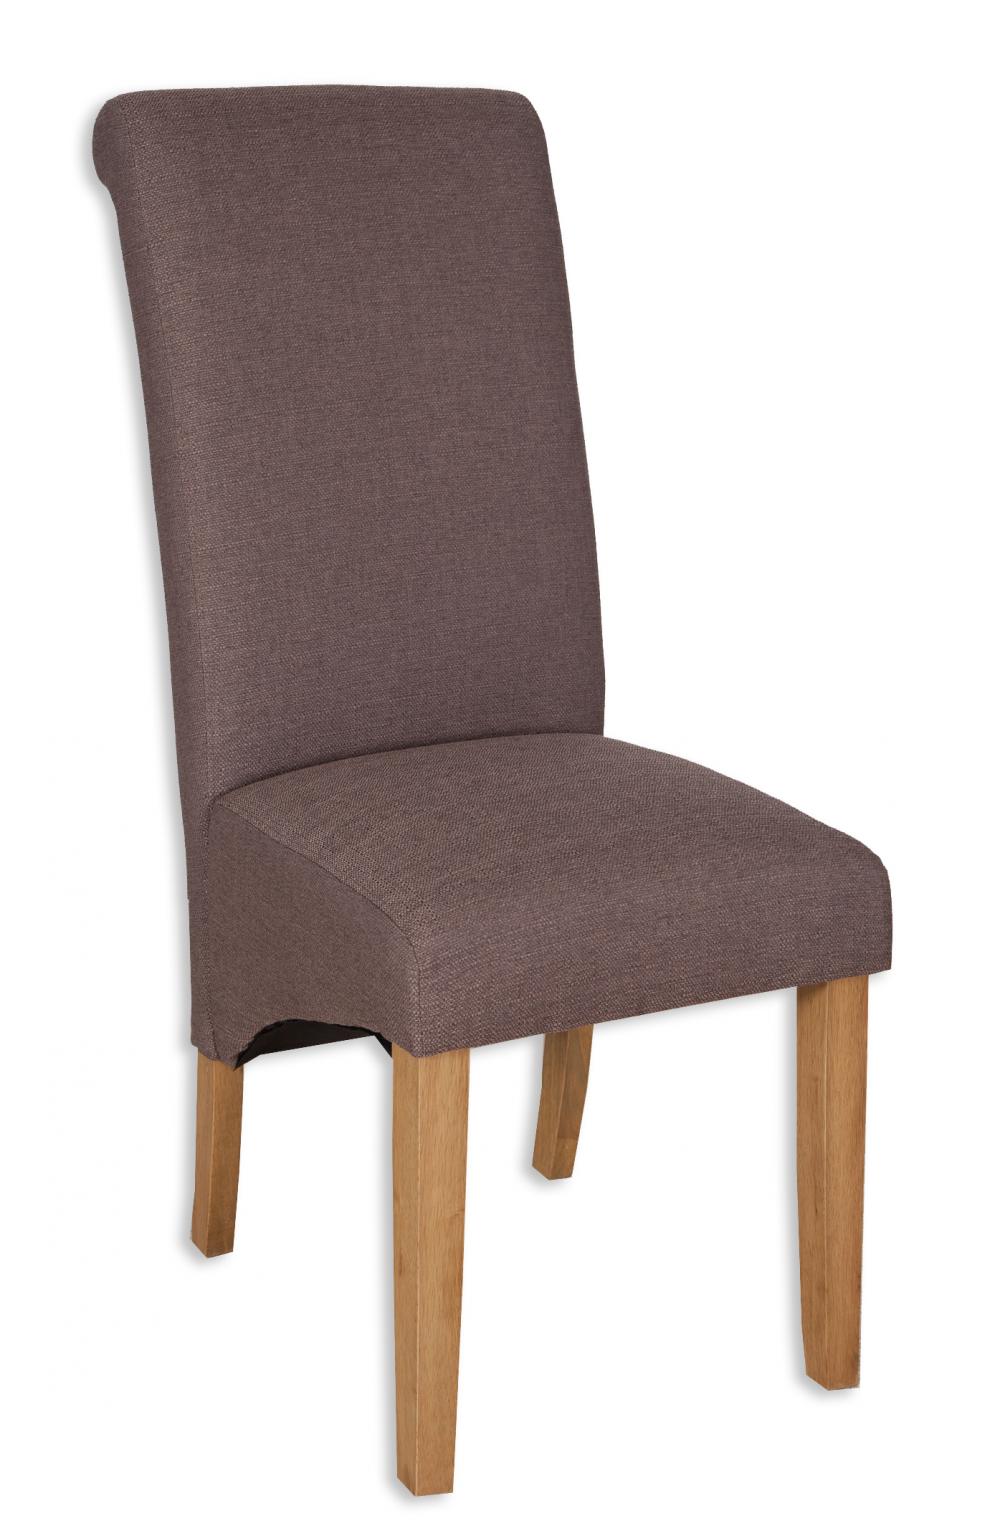 Coffee Fabric Dining Chair £149